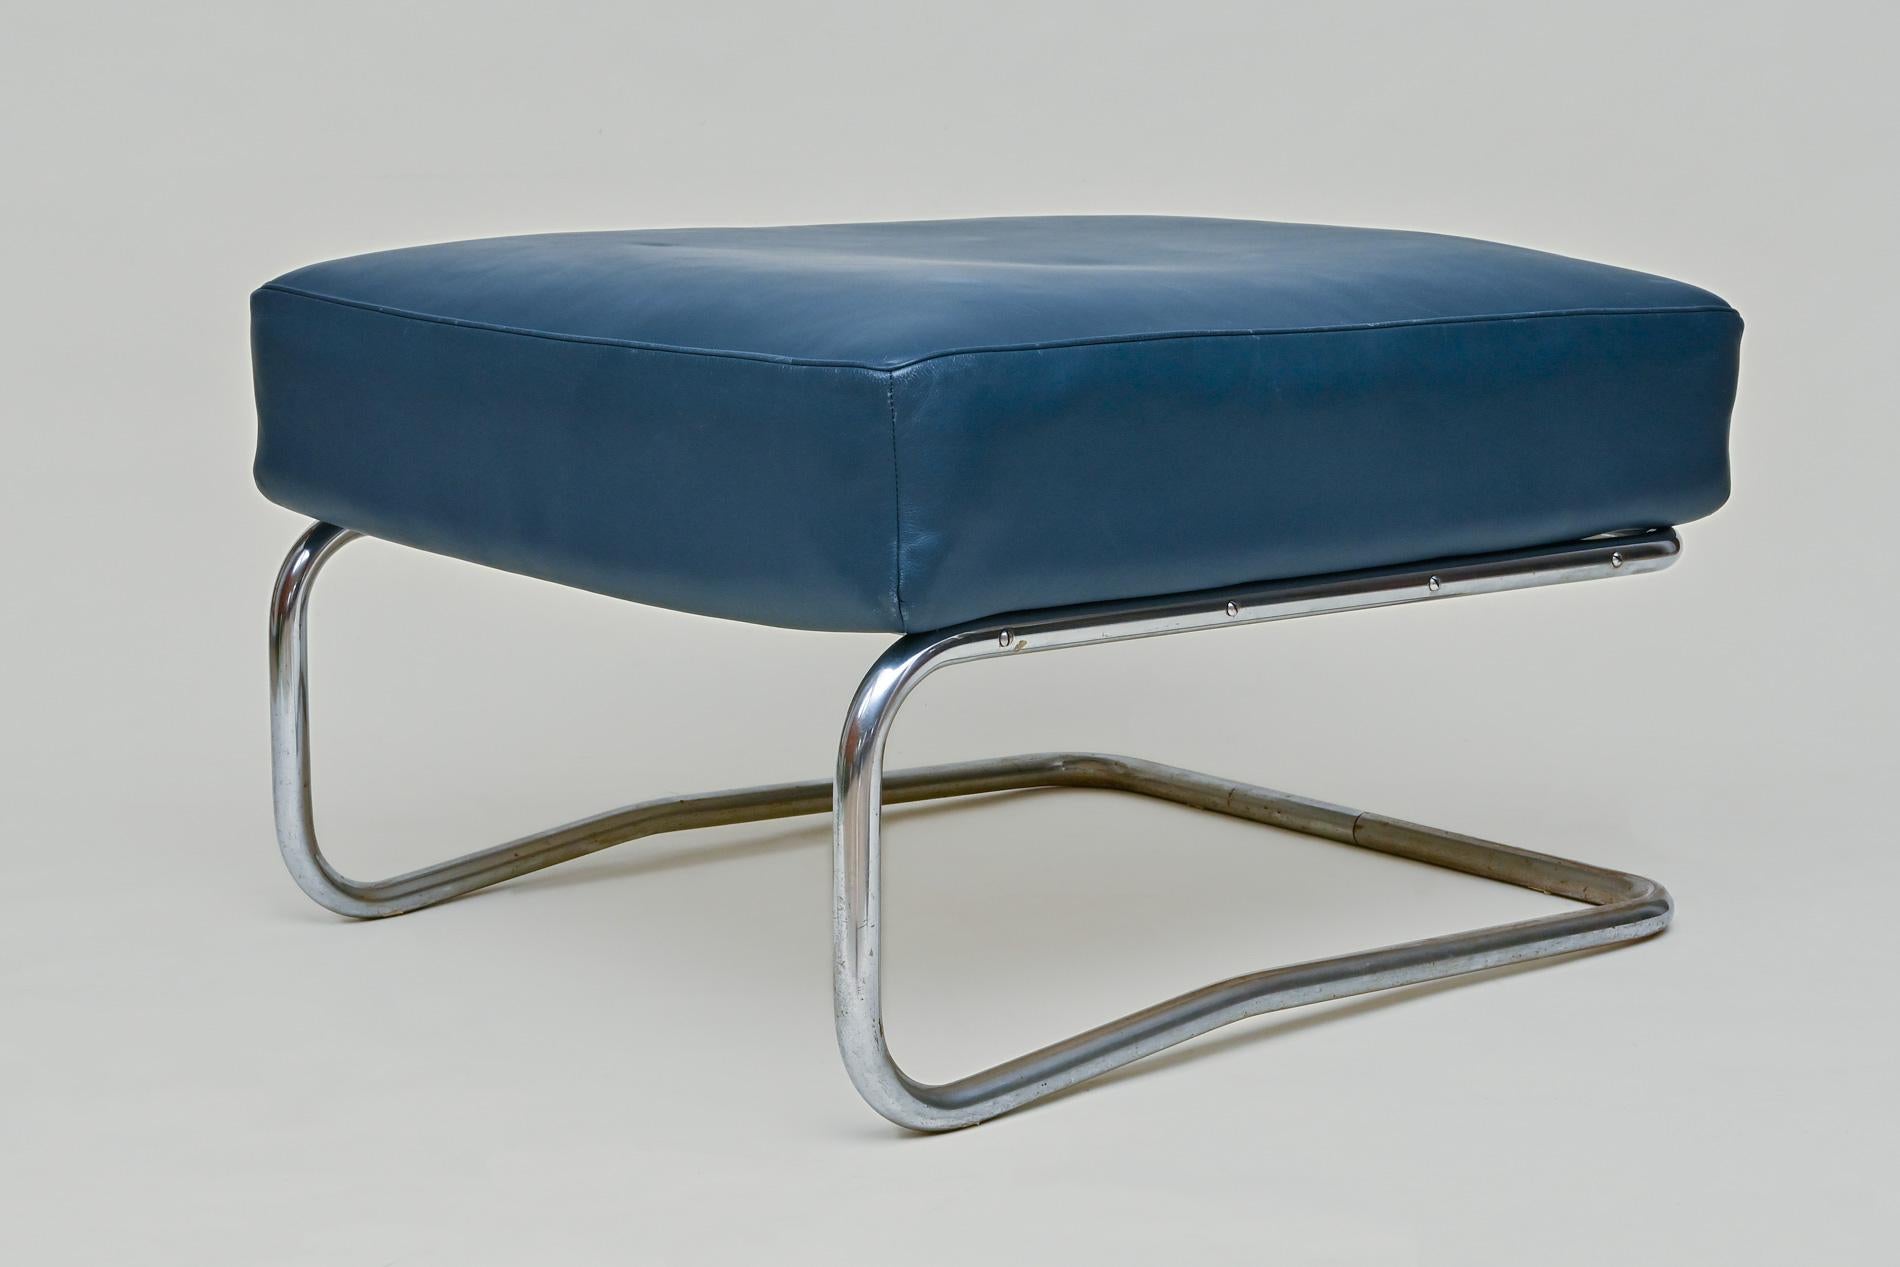 20th Century Lounge Chair with Foot Stool Steel Furniture German Desta Berlin 1